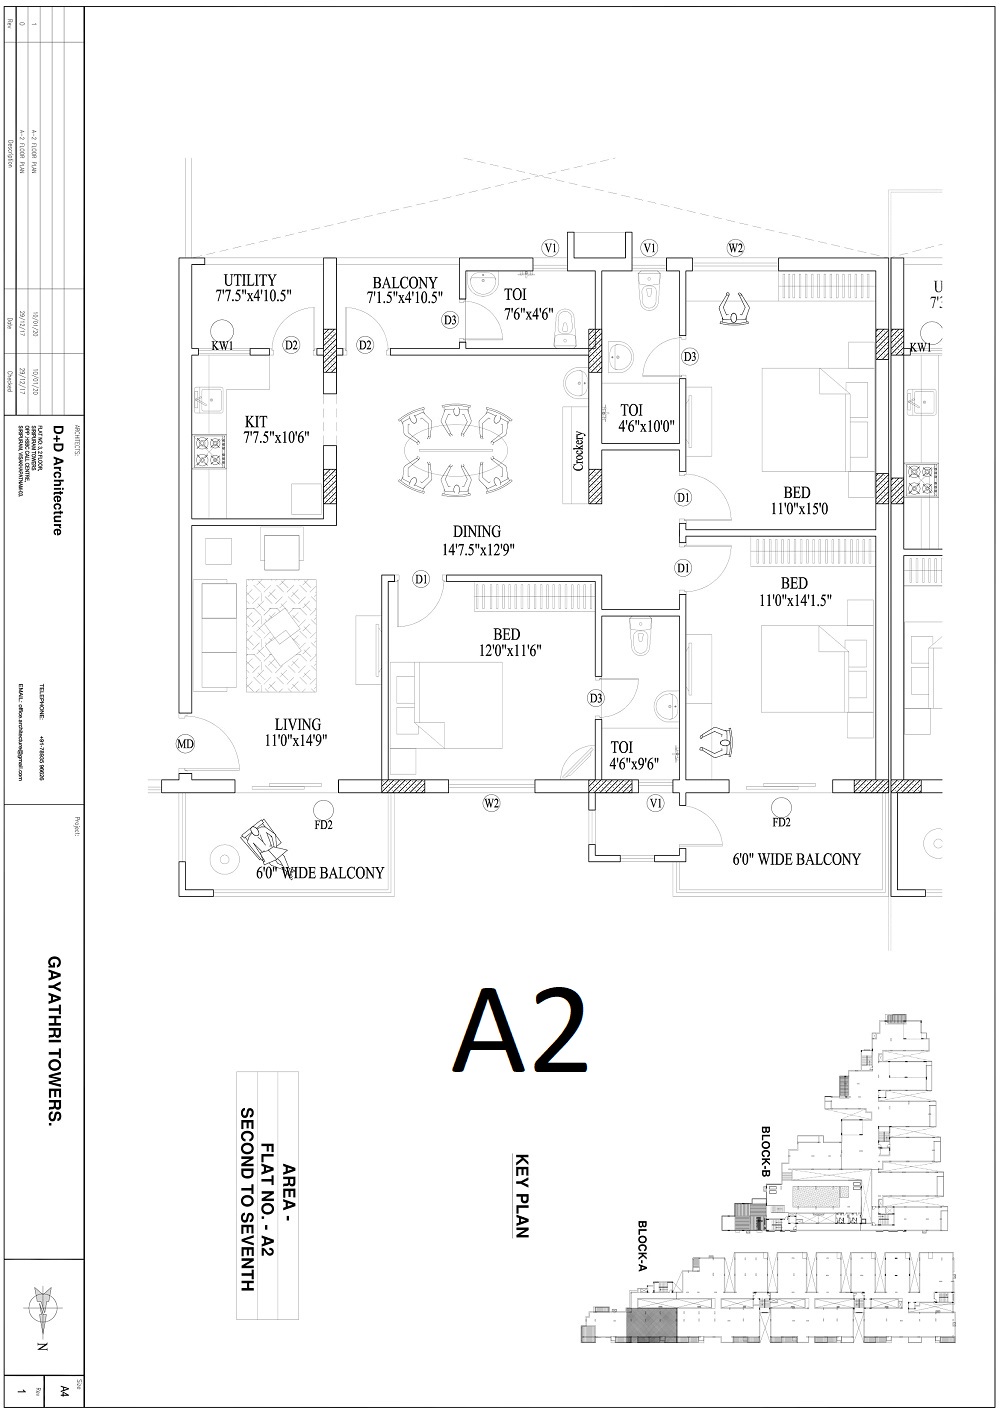 A2 - Tipcal Floor Plan